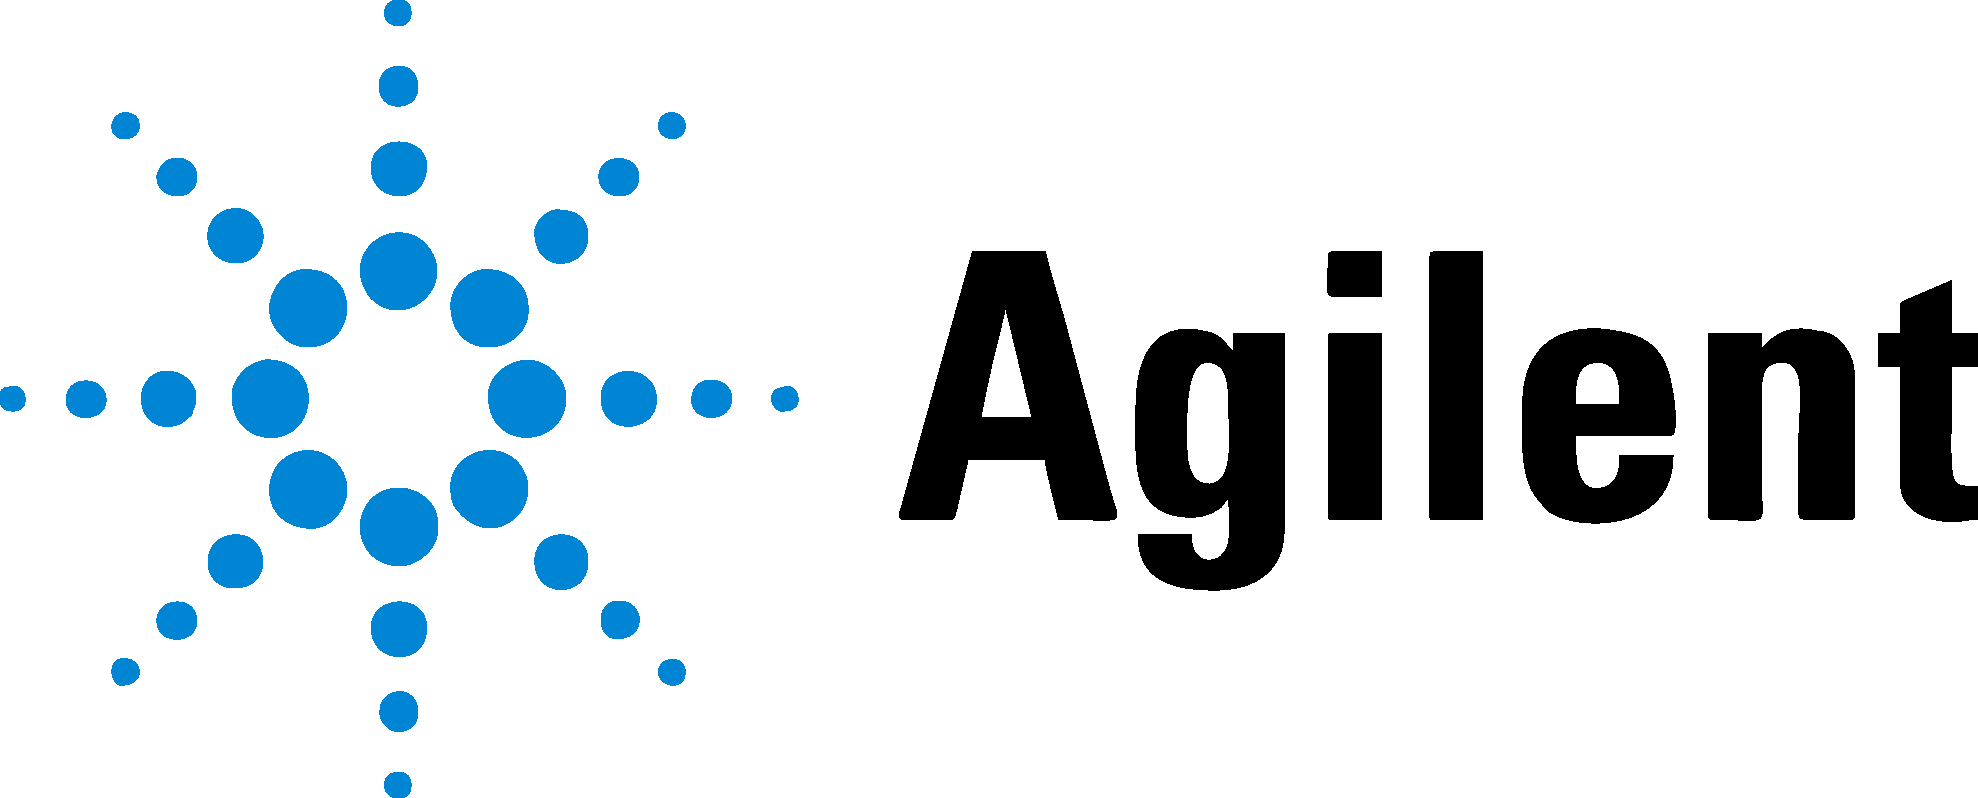 Agilent Technologies Logo png